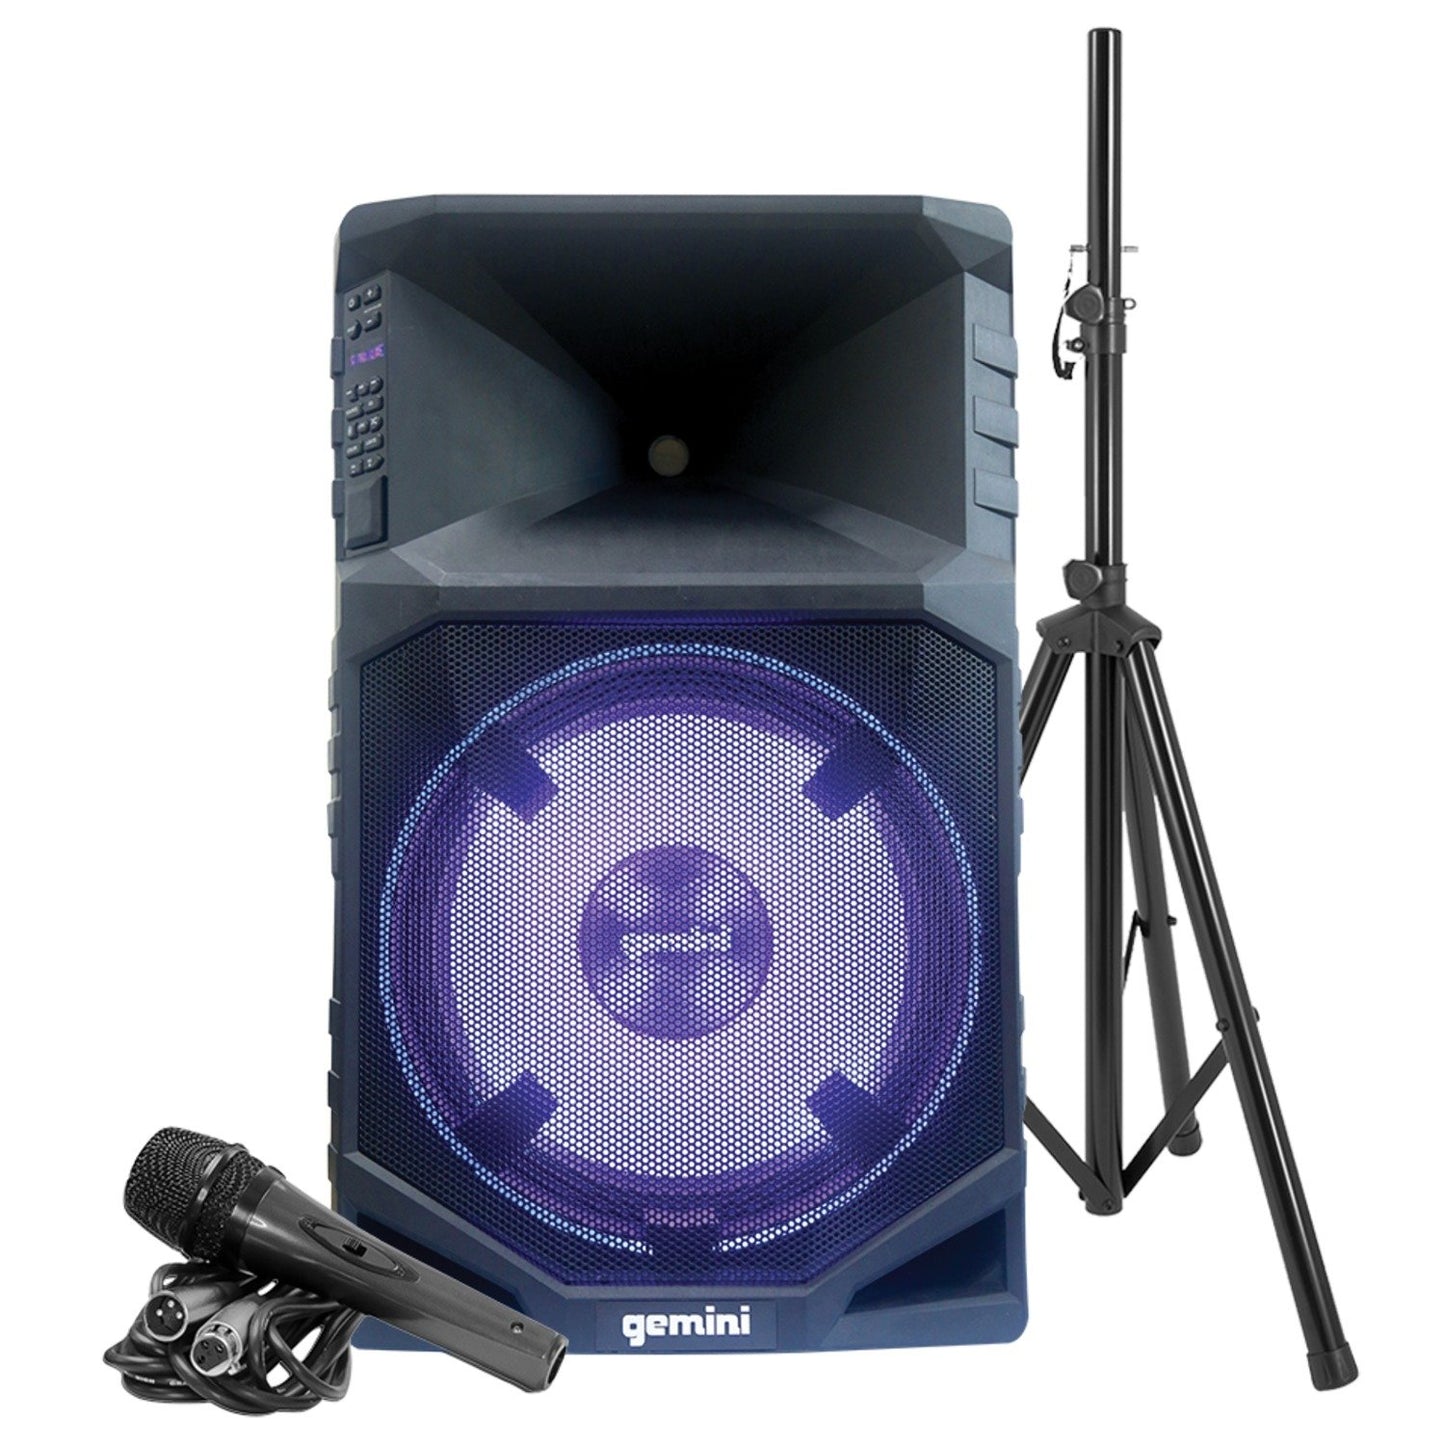 Gemini GSW-T1500PK 15" Portable Water-Resistant Wireless Bluetooth System